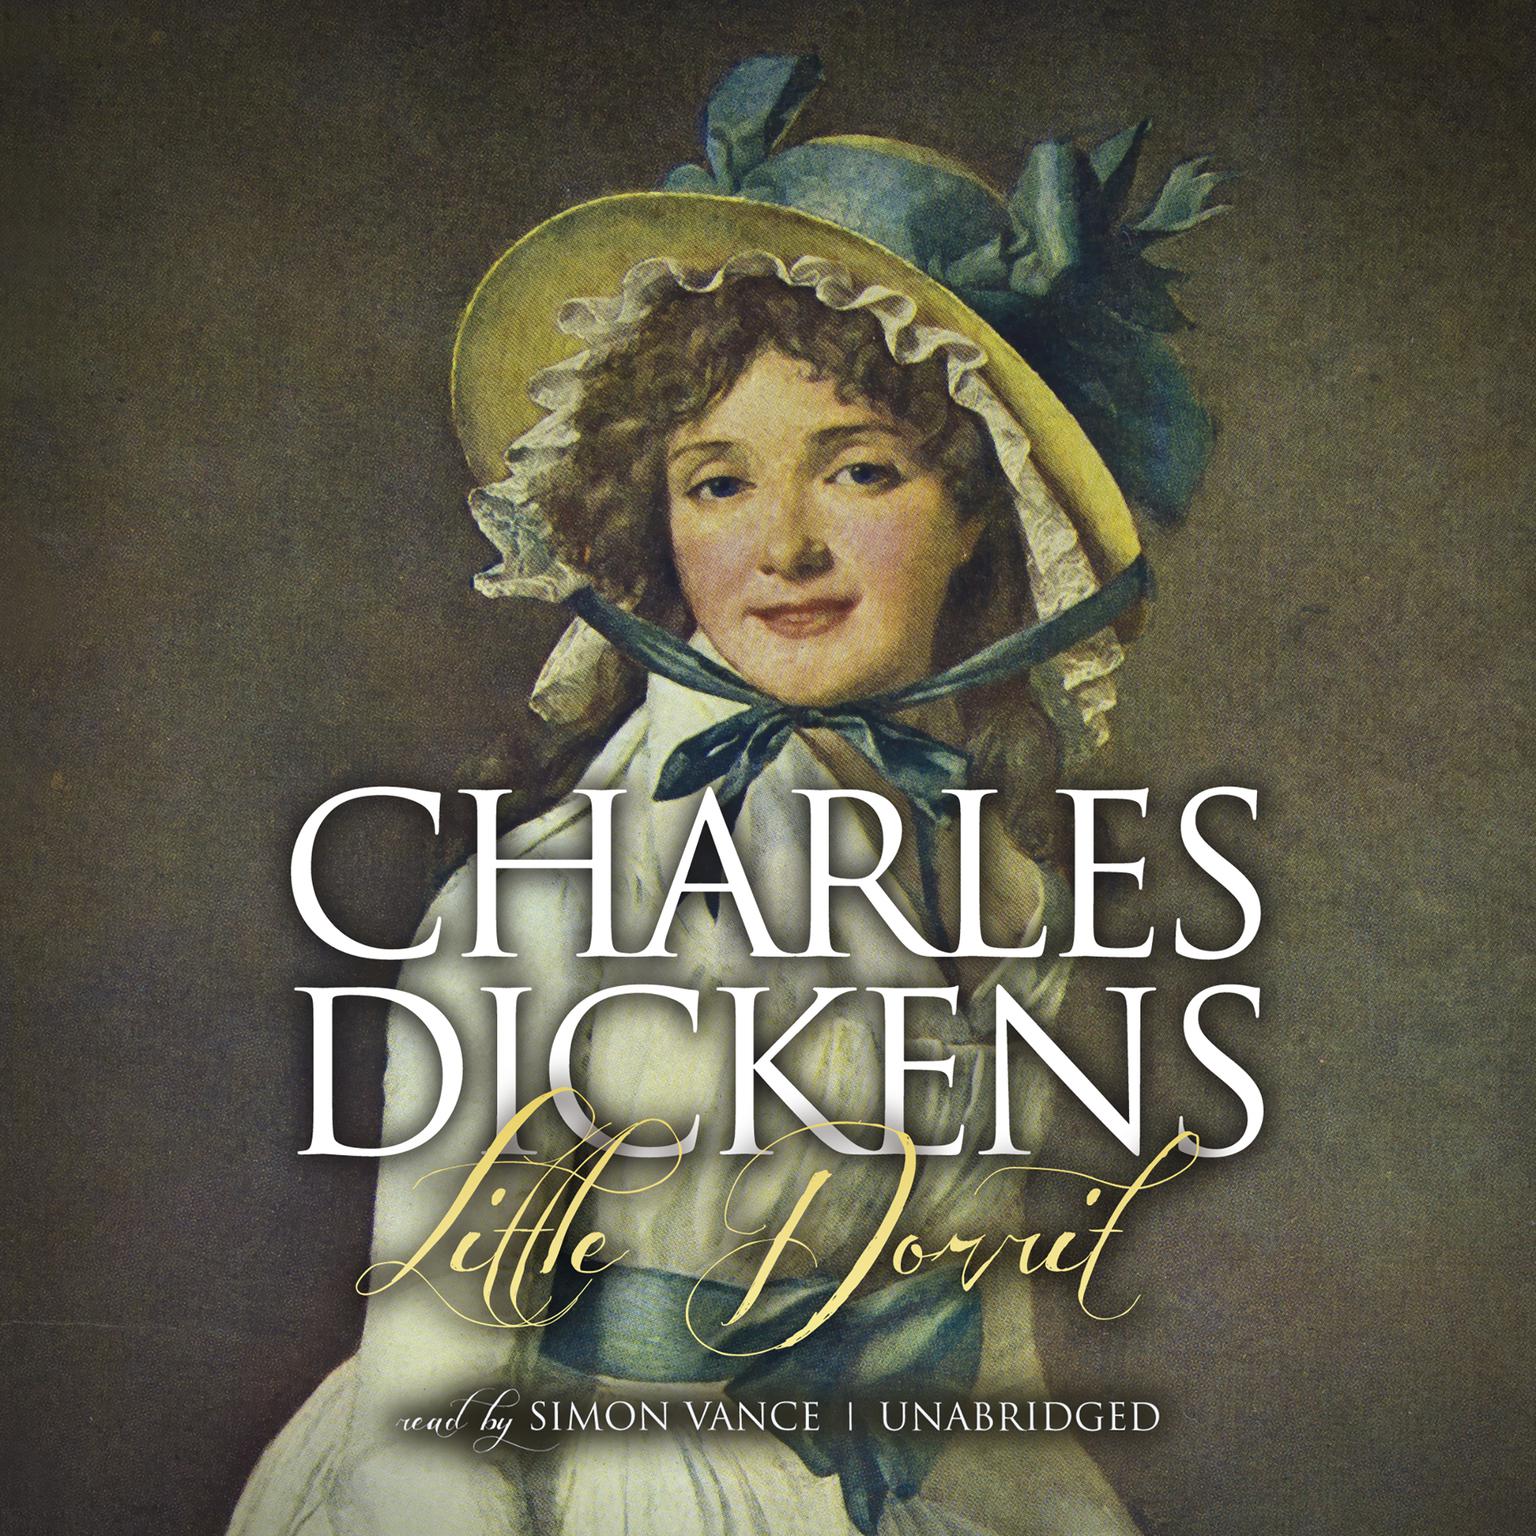 Little Dorrit Audiobook, by Charles Dickens